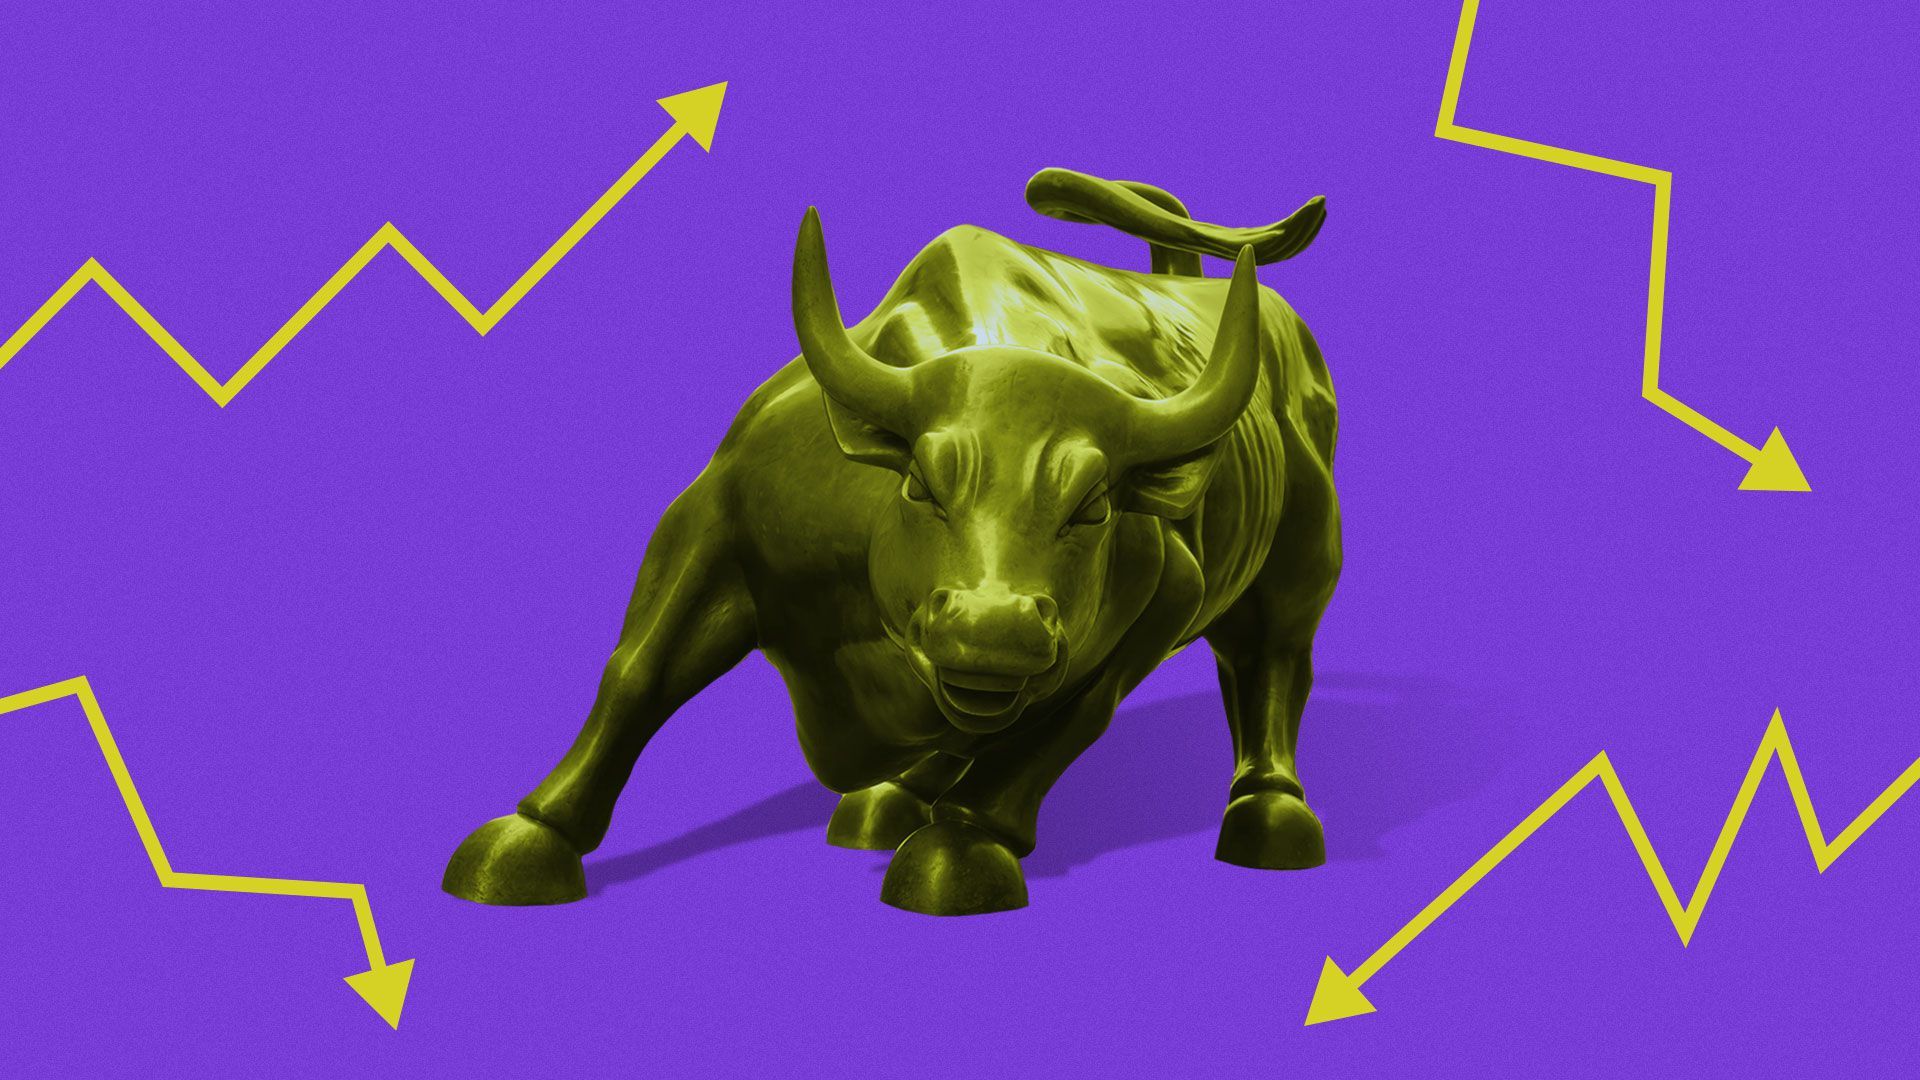 Illustration of the Wall Street Bull